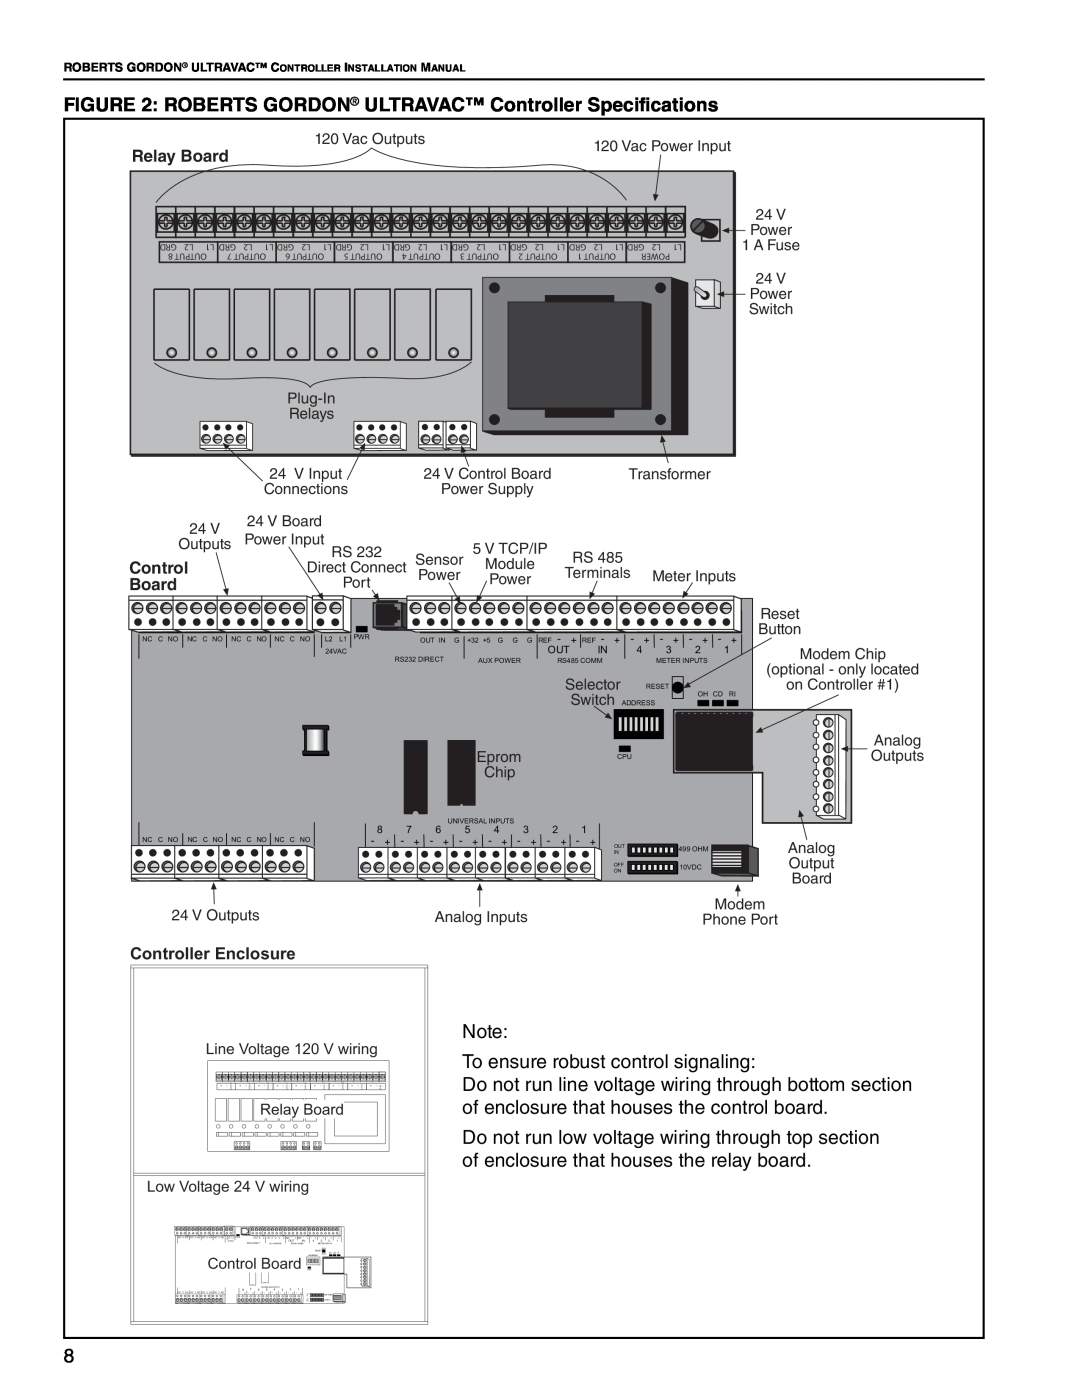 Roberts Gorden NEMA 4 installation manual To ensure robust control signaling, Relay Board, Controller Enclosure 